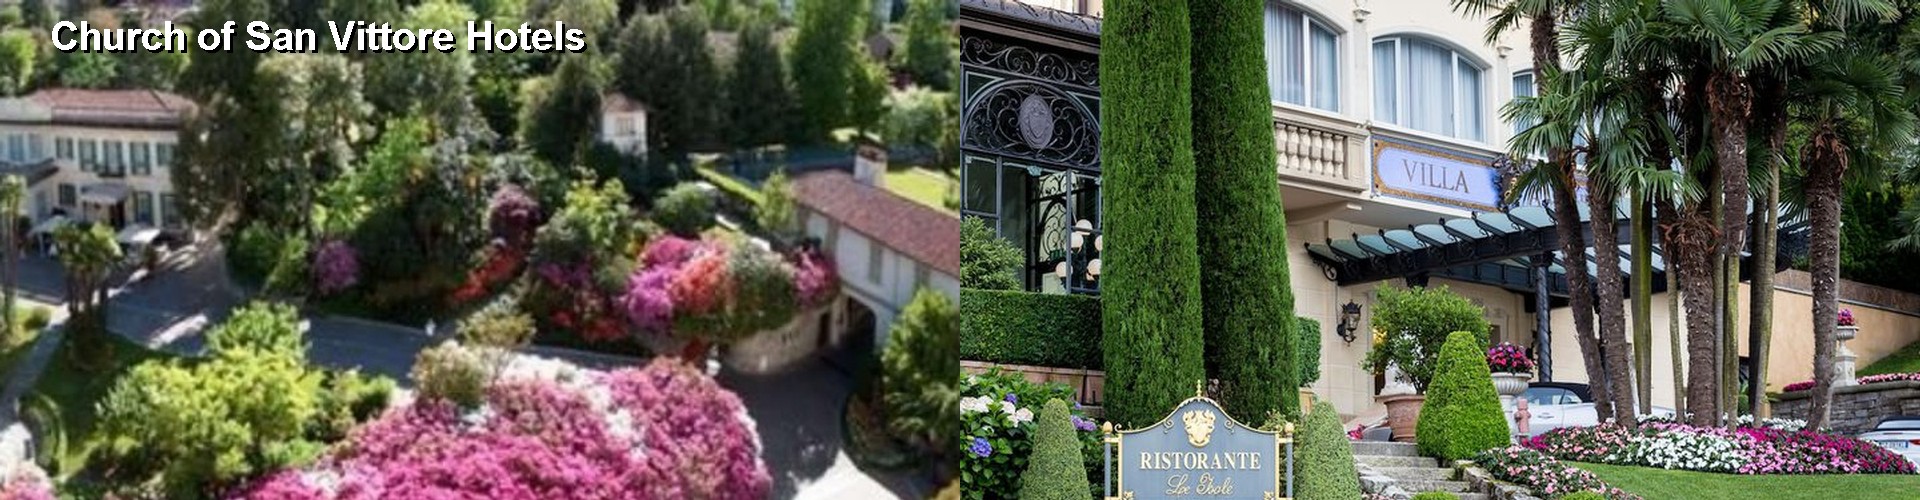 5 Best Hotels near Church of San Vittore